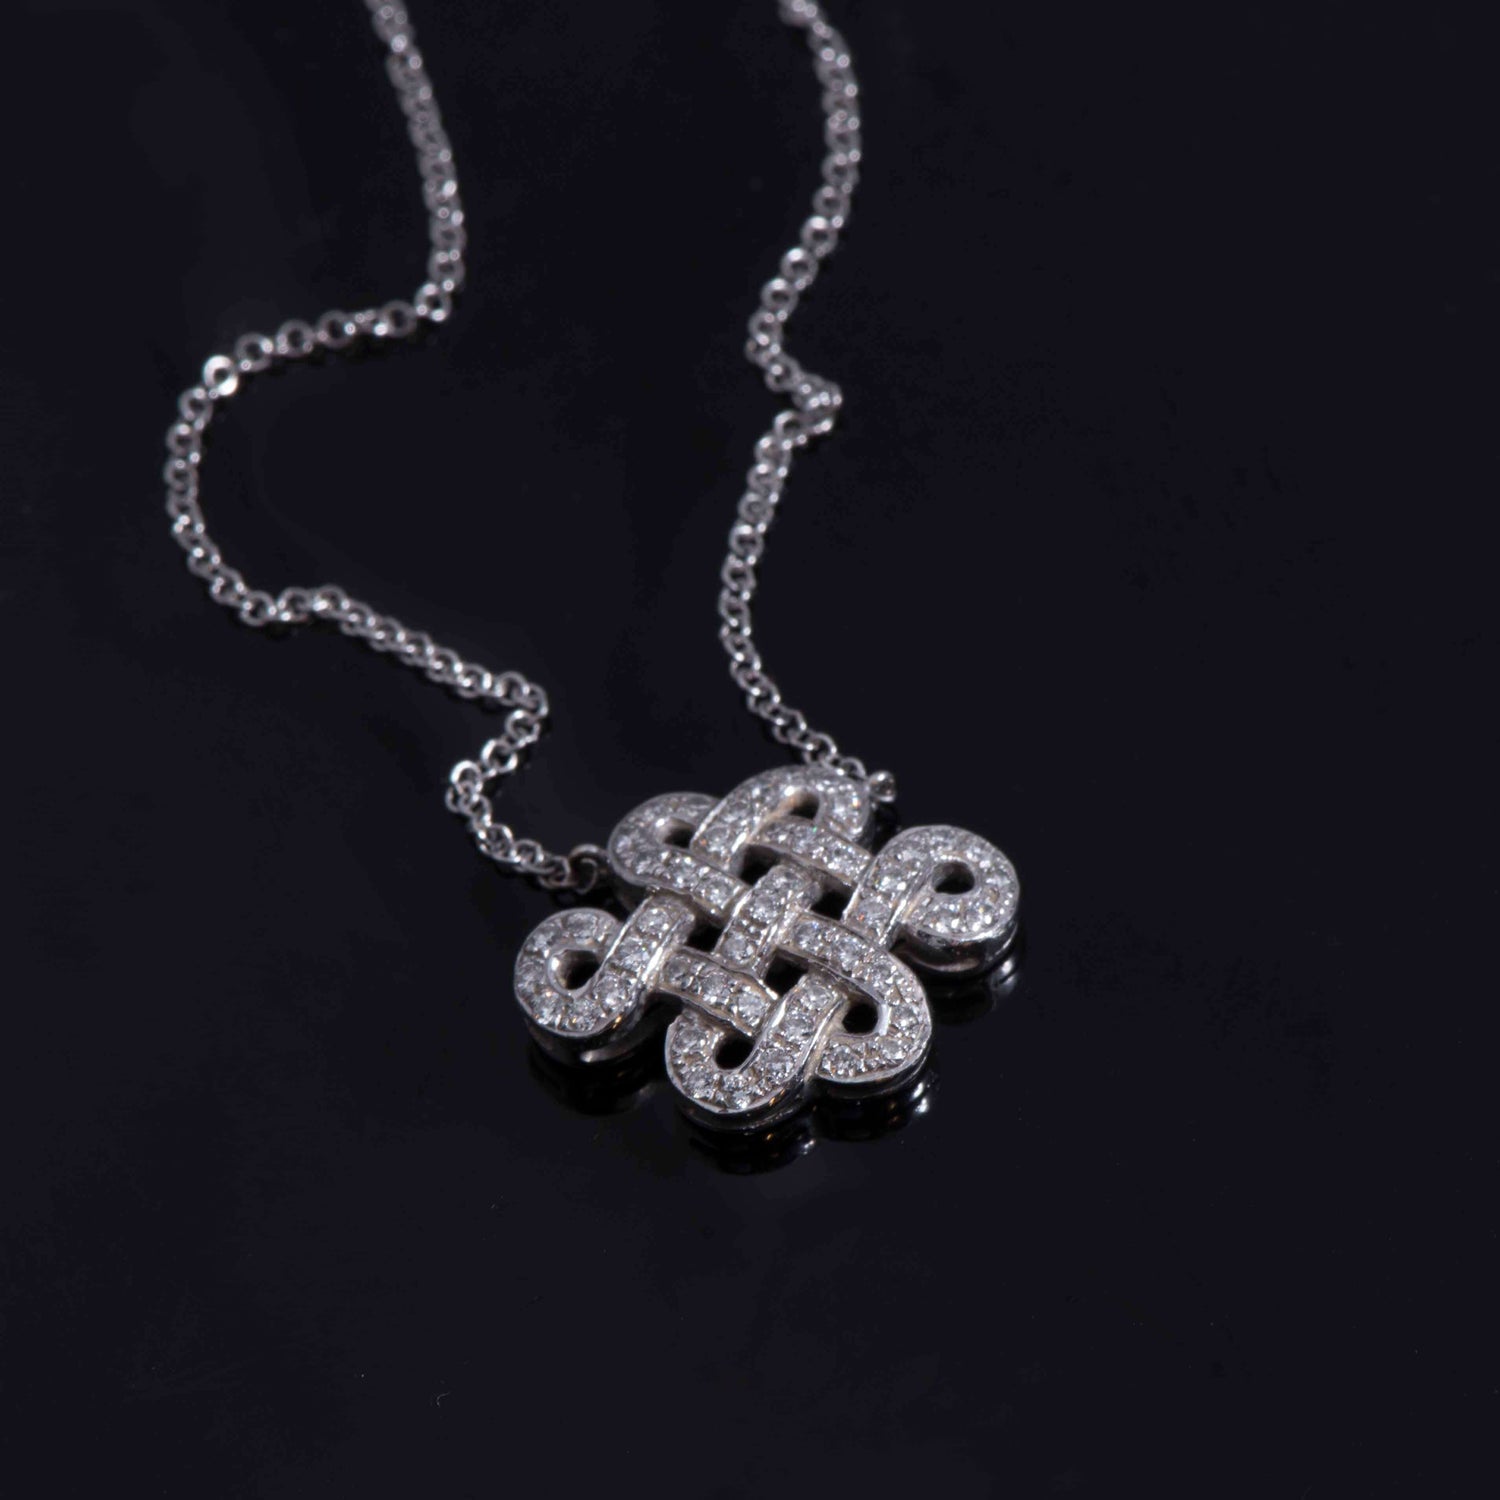 18 Karat white Gold Diamond Knot Necklace, by Staurino Fratelli - Lippa's  Jewelry